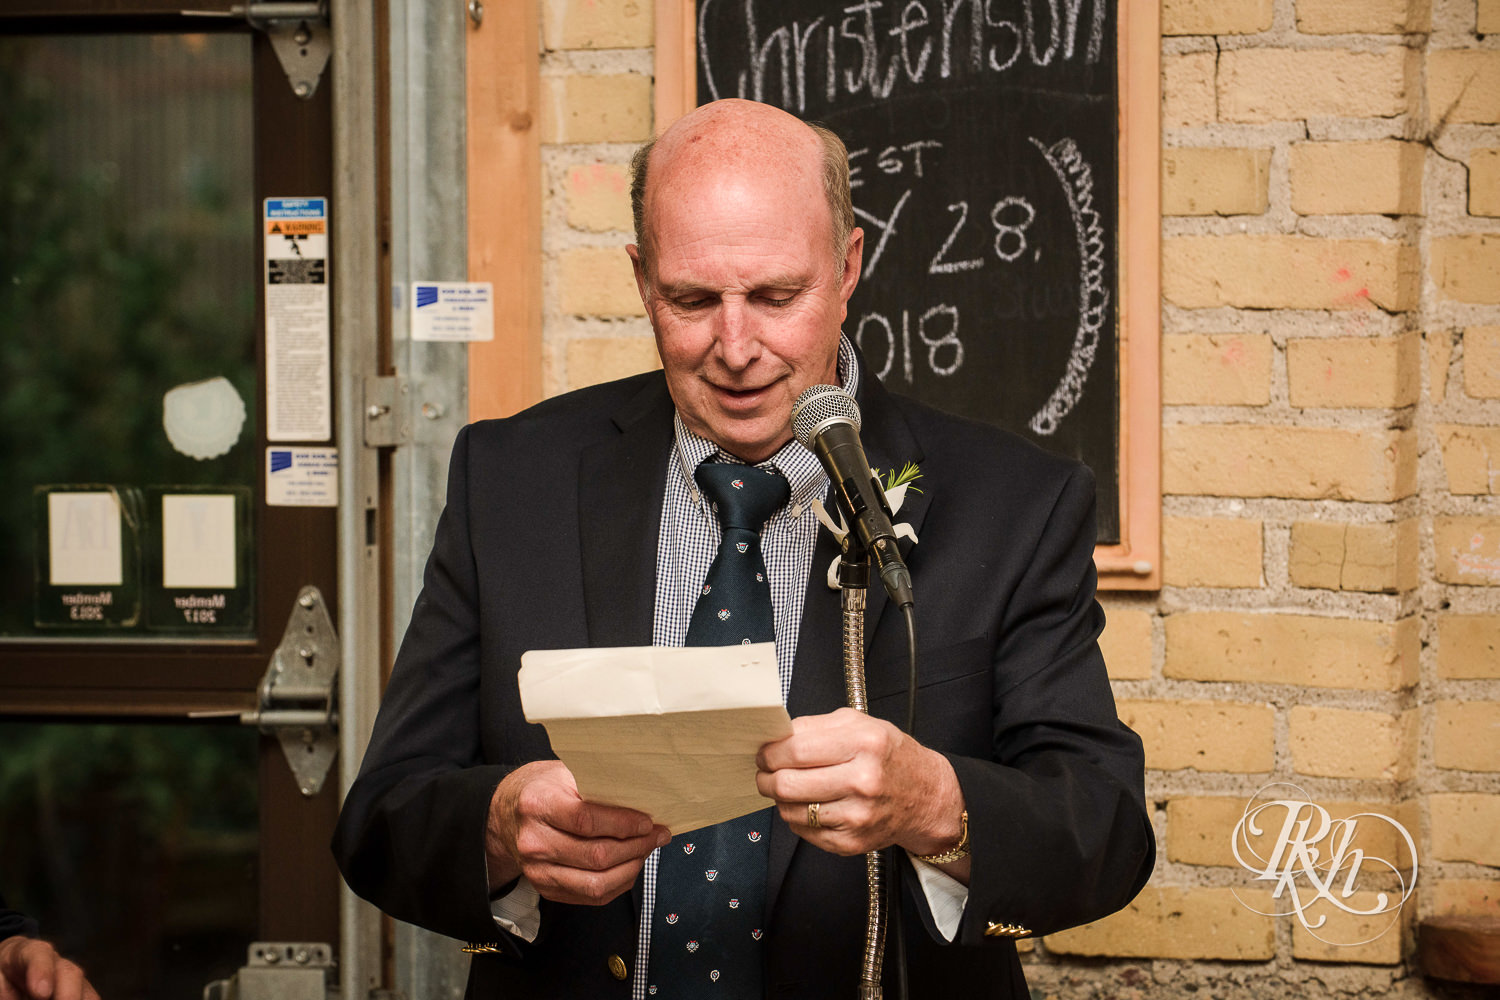 Dad smiles during wedding speeches at 612 Brew in Minneapolis, Minnesota.